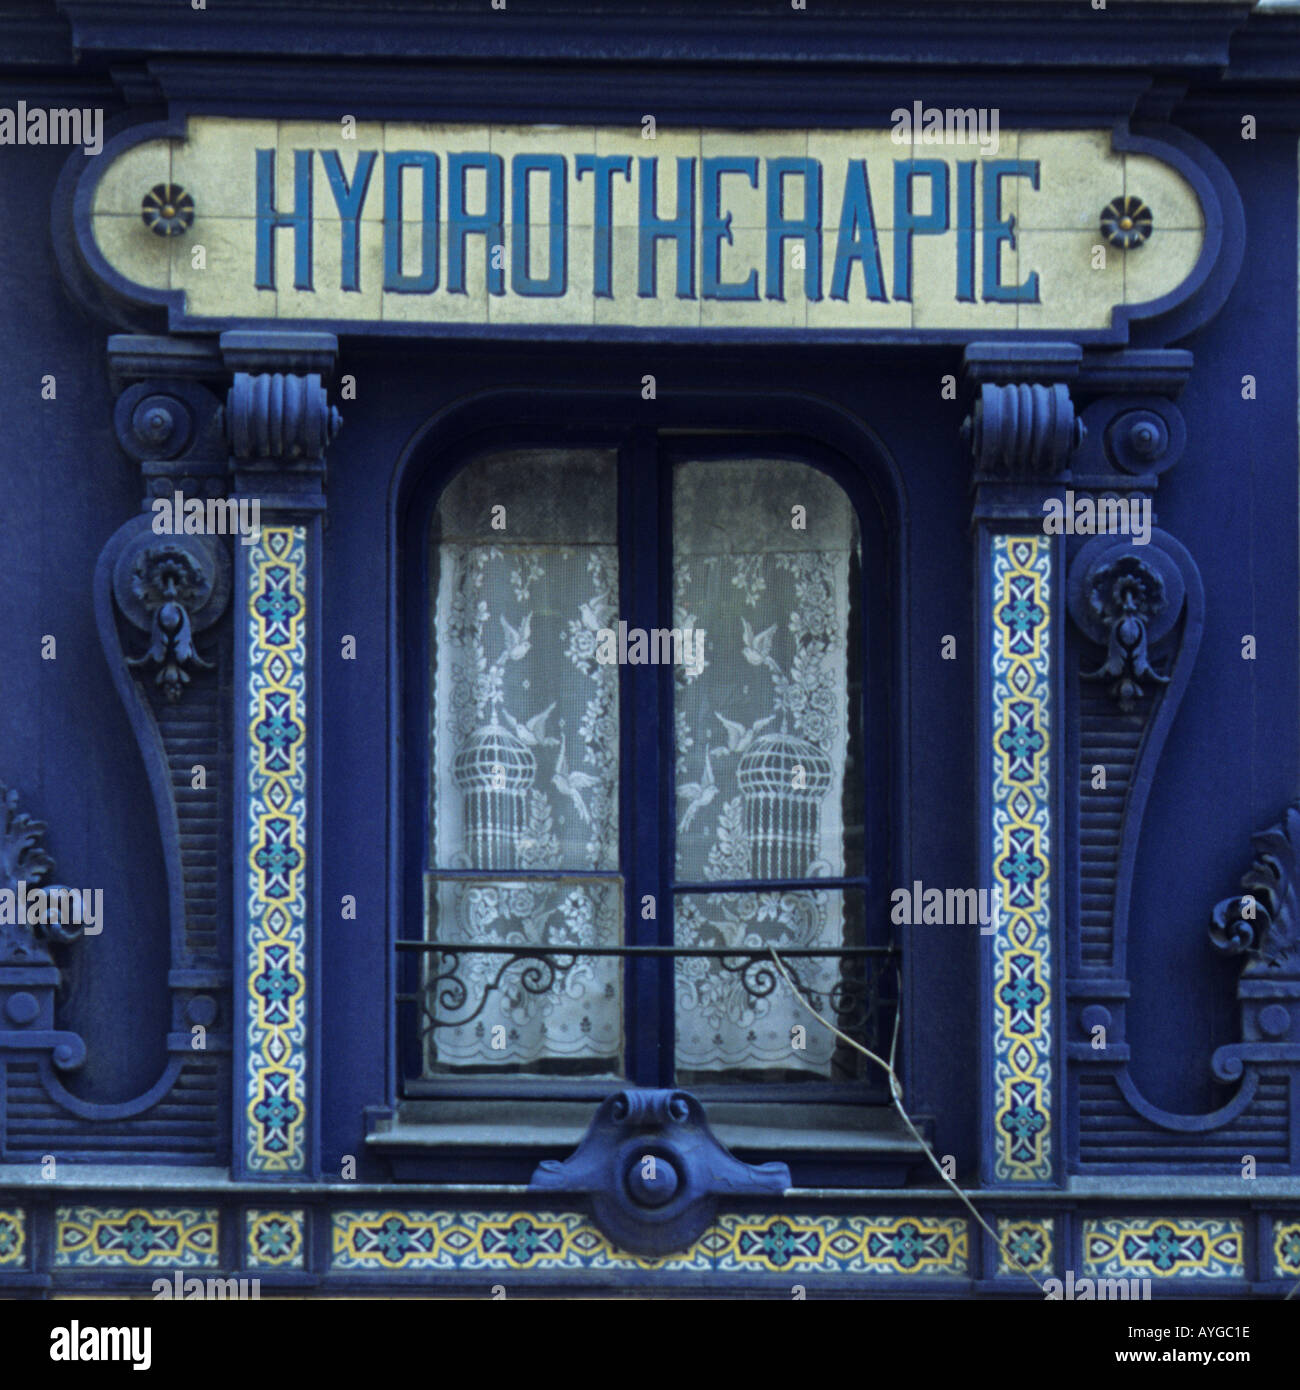 Hydrotheropie shop, Paris, France Stock Photo